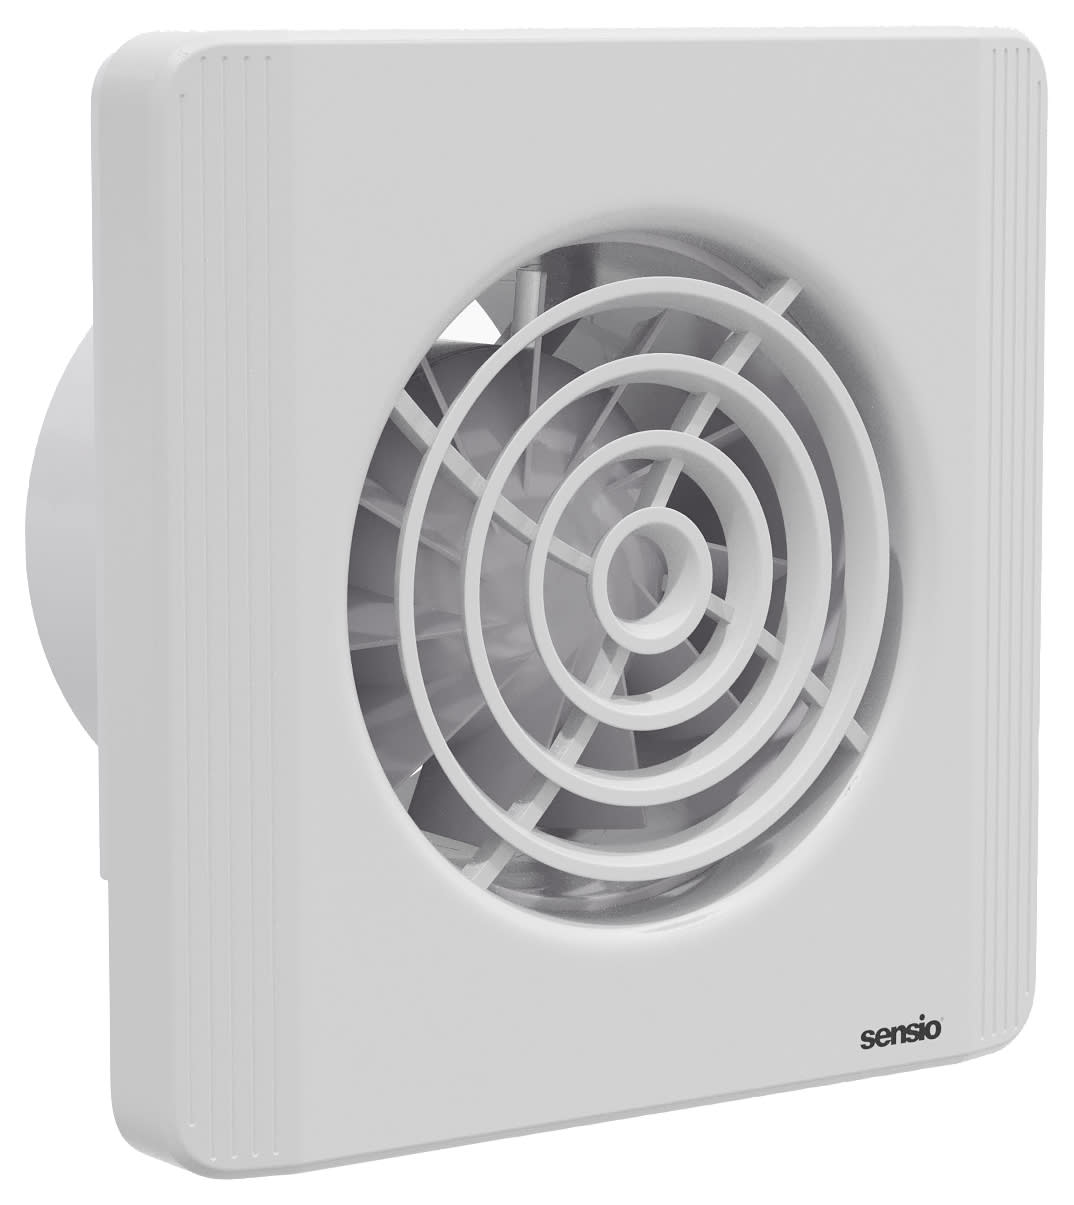 Sensio Layci White Wall Ventilation Fan with Aquilo